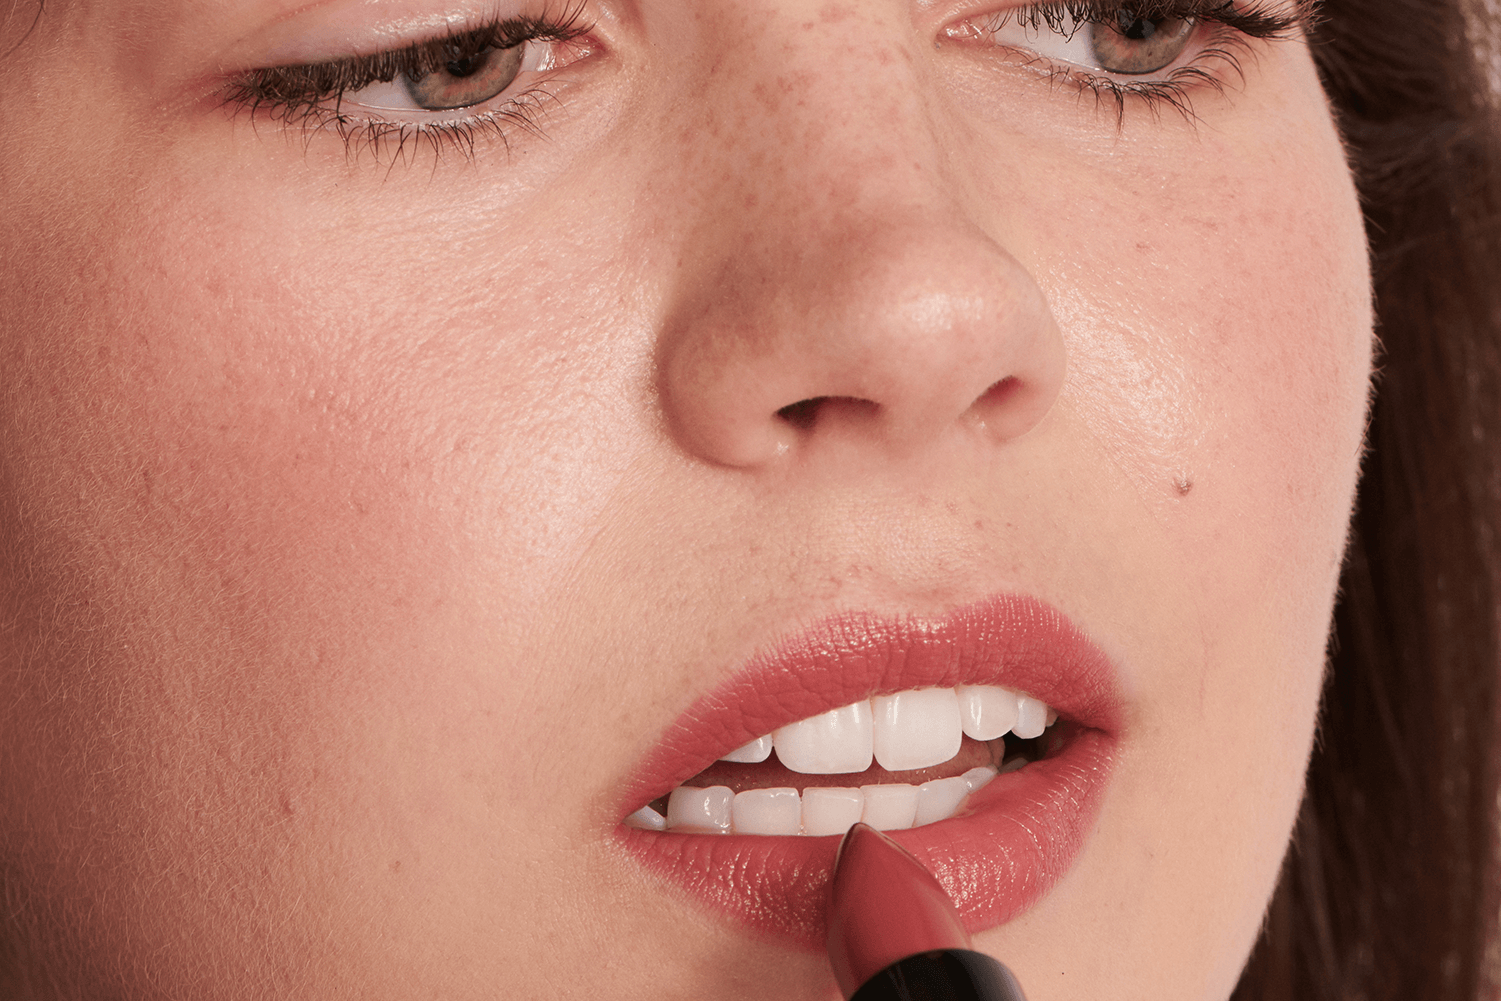 Model putting on lipstick